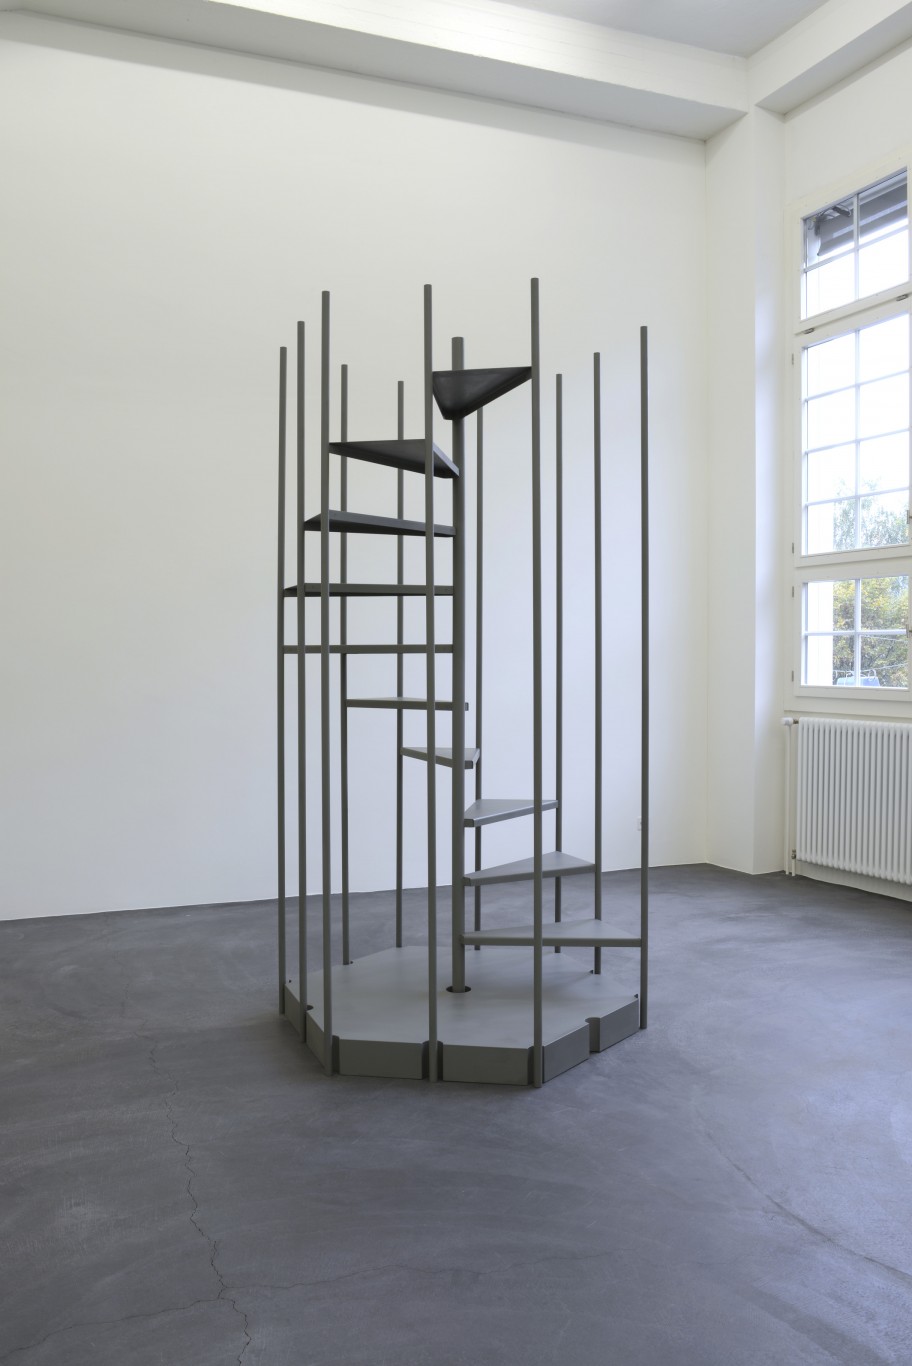 Werner Feiersinger Untitled, 2011steel, primer 263 x 143 x 143 cm 